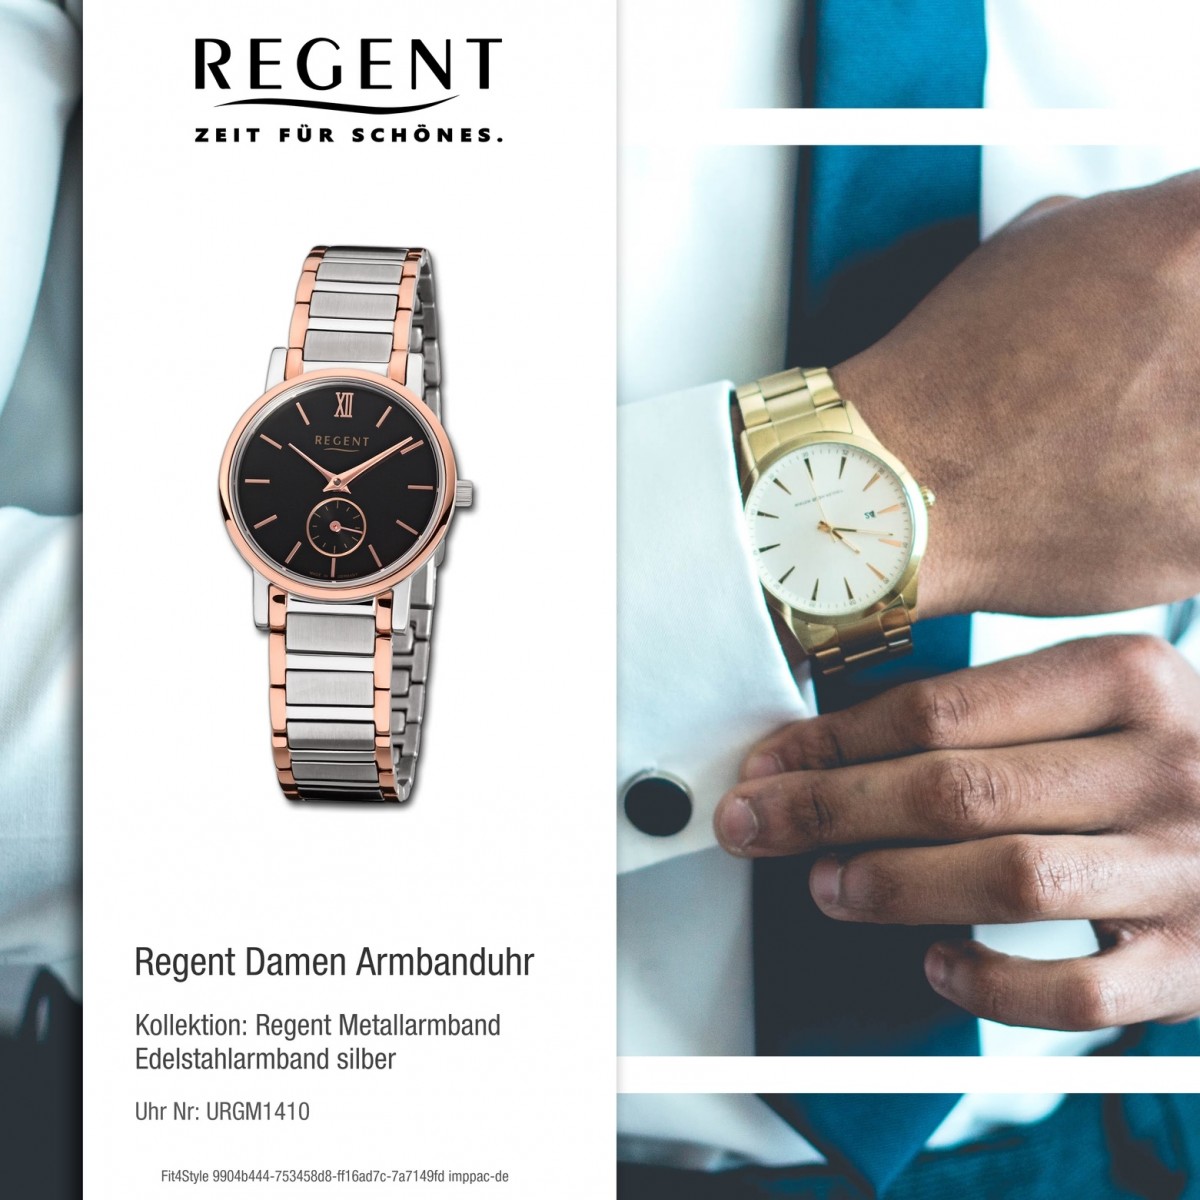 Edelstahl-Armband Uhr Quarz-Uhr Damen-Armbanduhr silber URGM1410 Regent rosegold